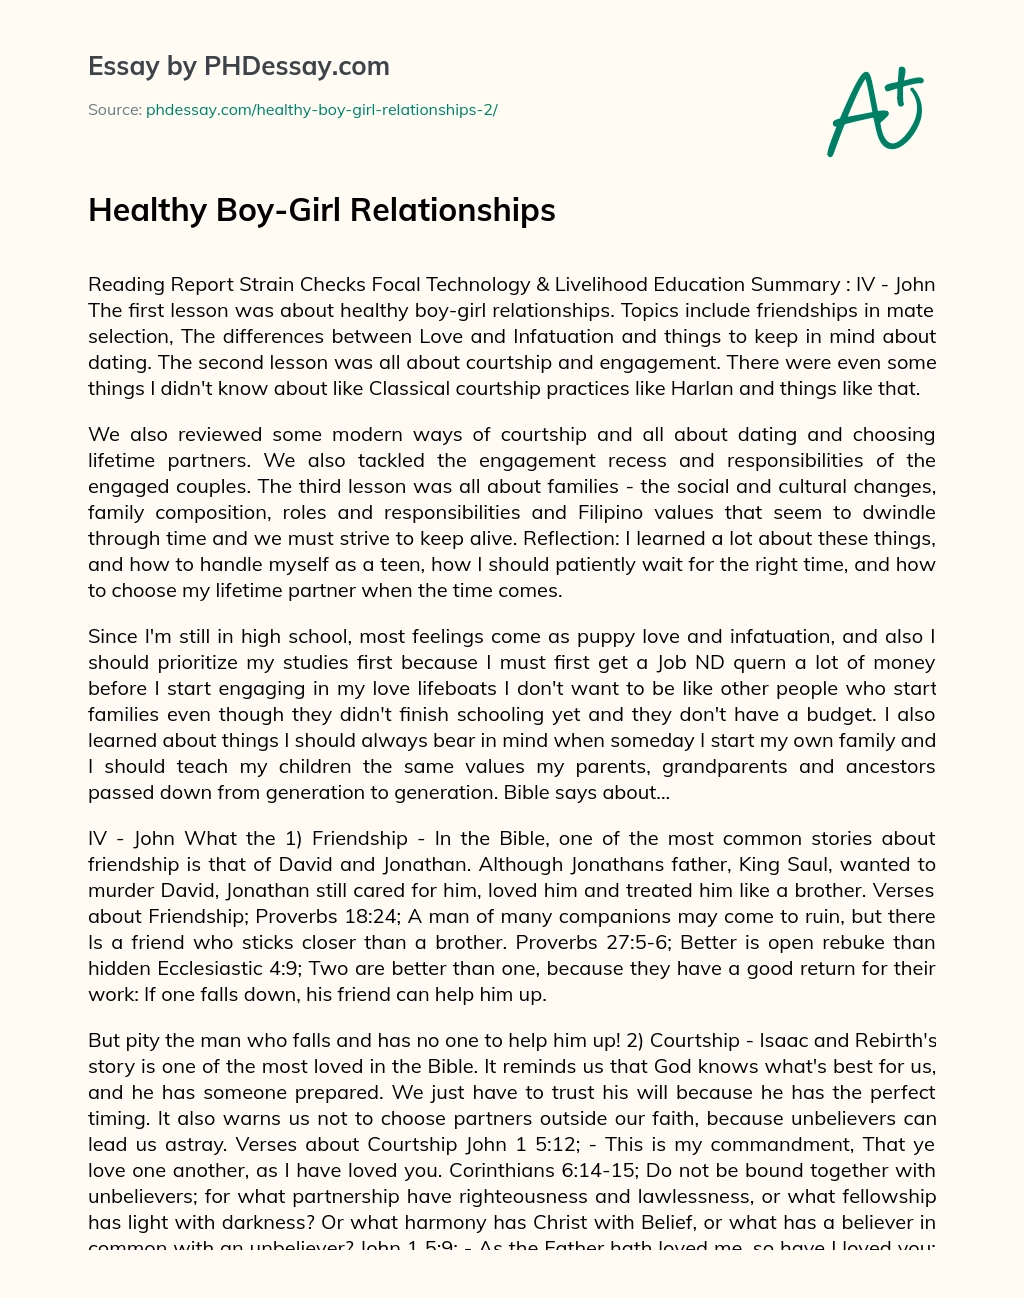 Healthy Boy-Girl Relationships essay